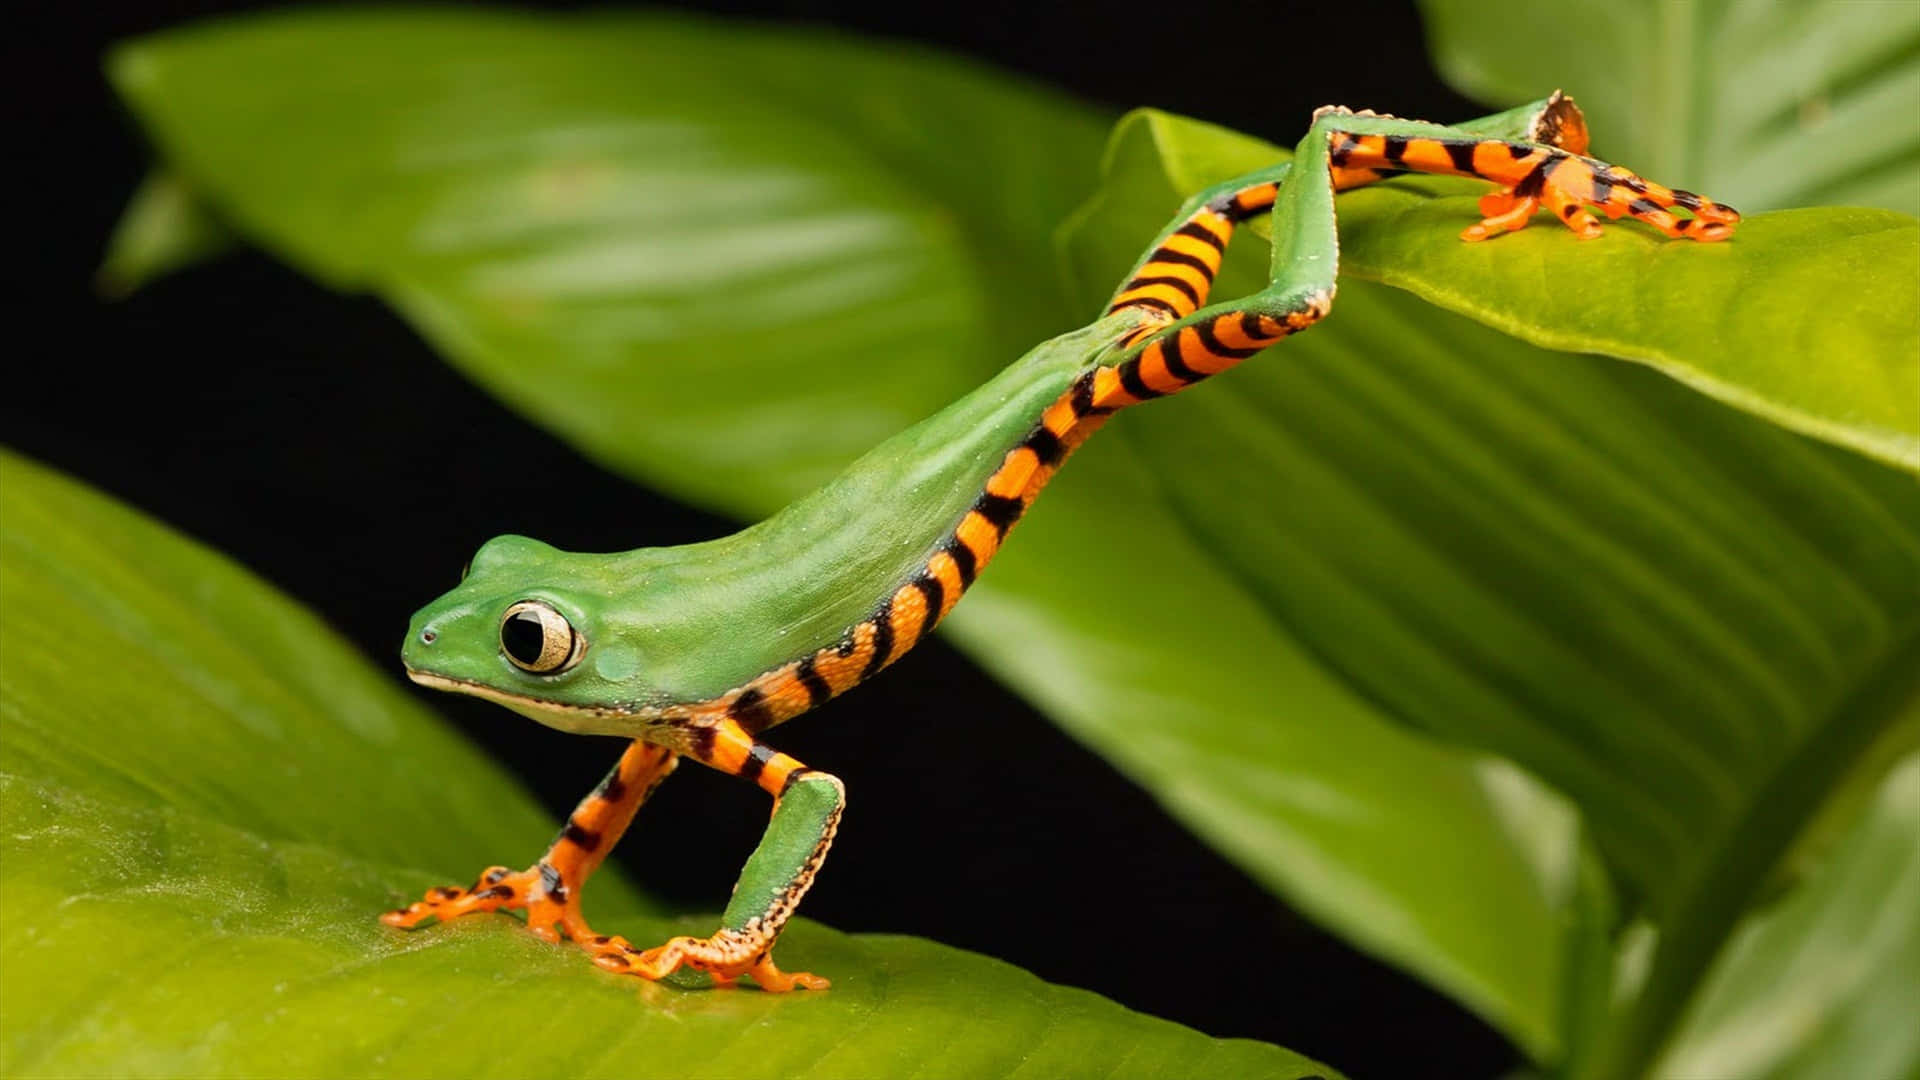 Vibrant Green Frog Orange Striped Limbs.jpg Wallpaper